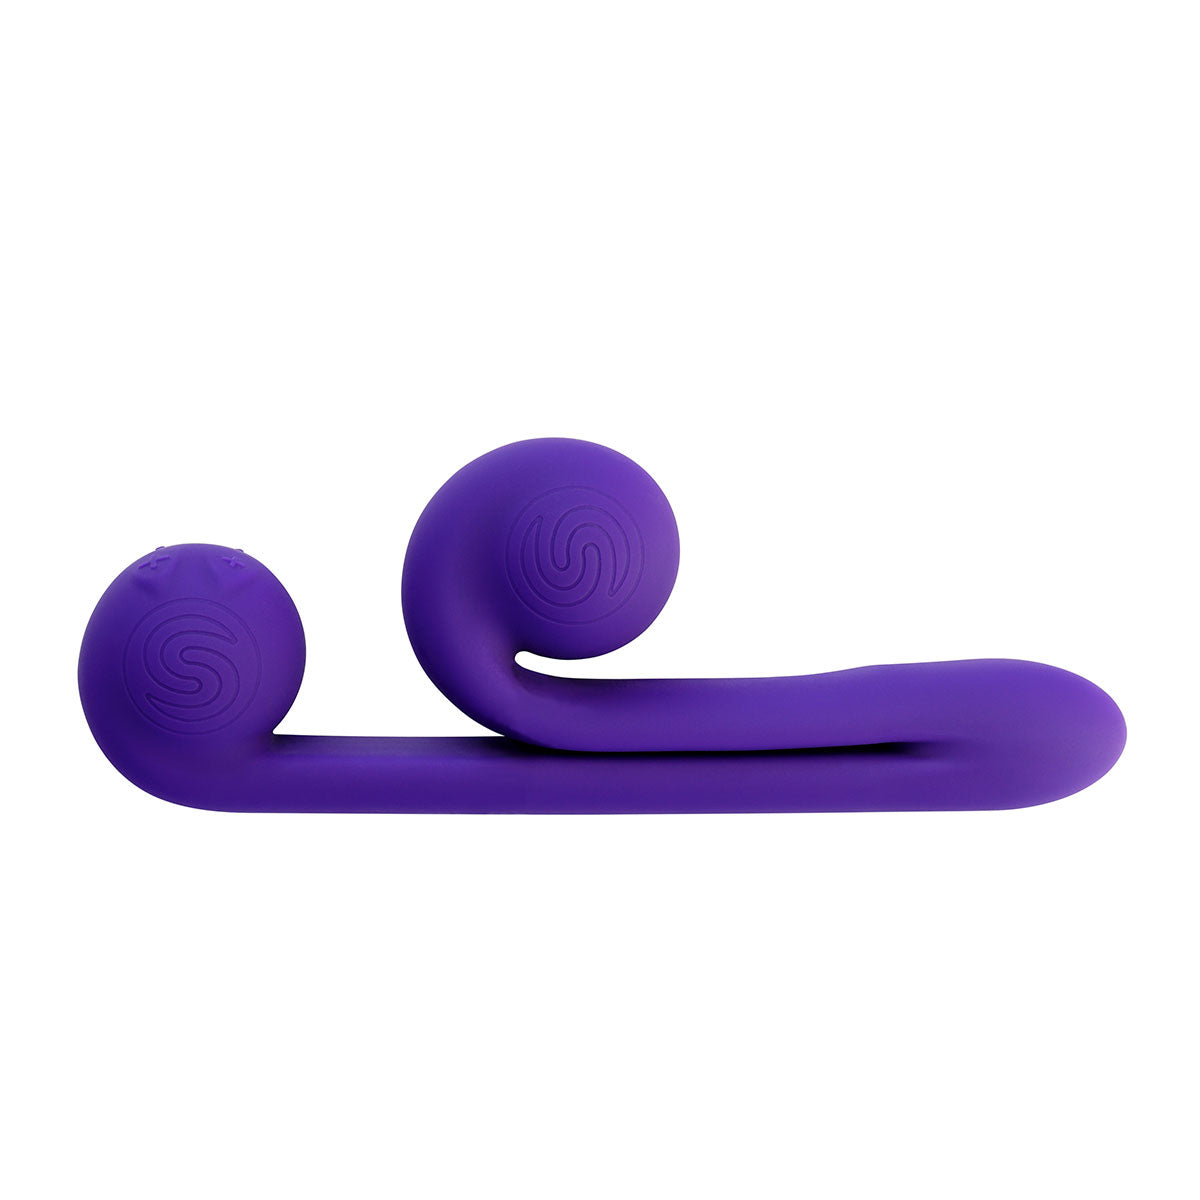 Snail Vibe - Purple Intimates Adult Boutique